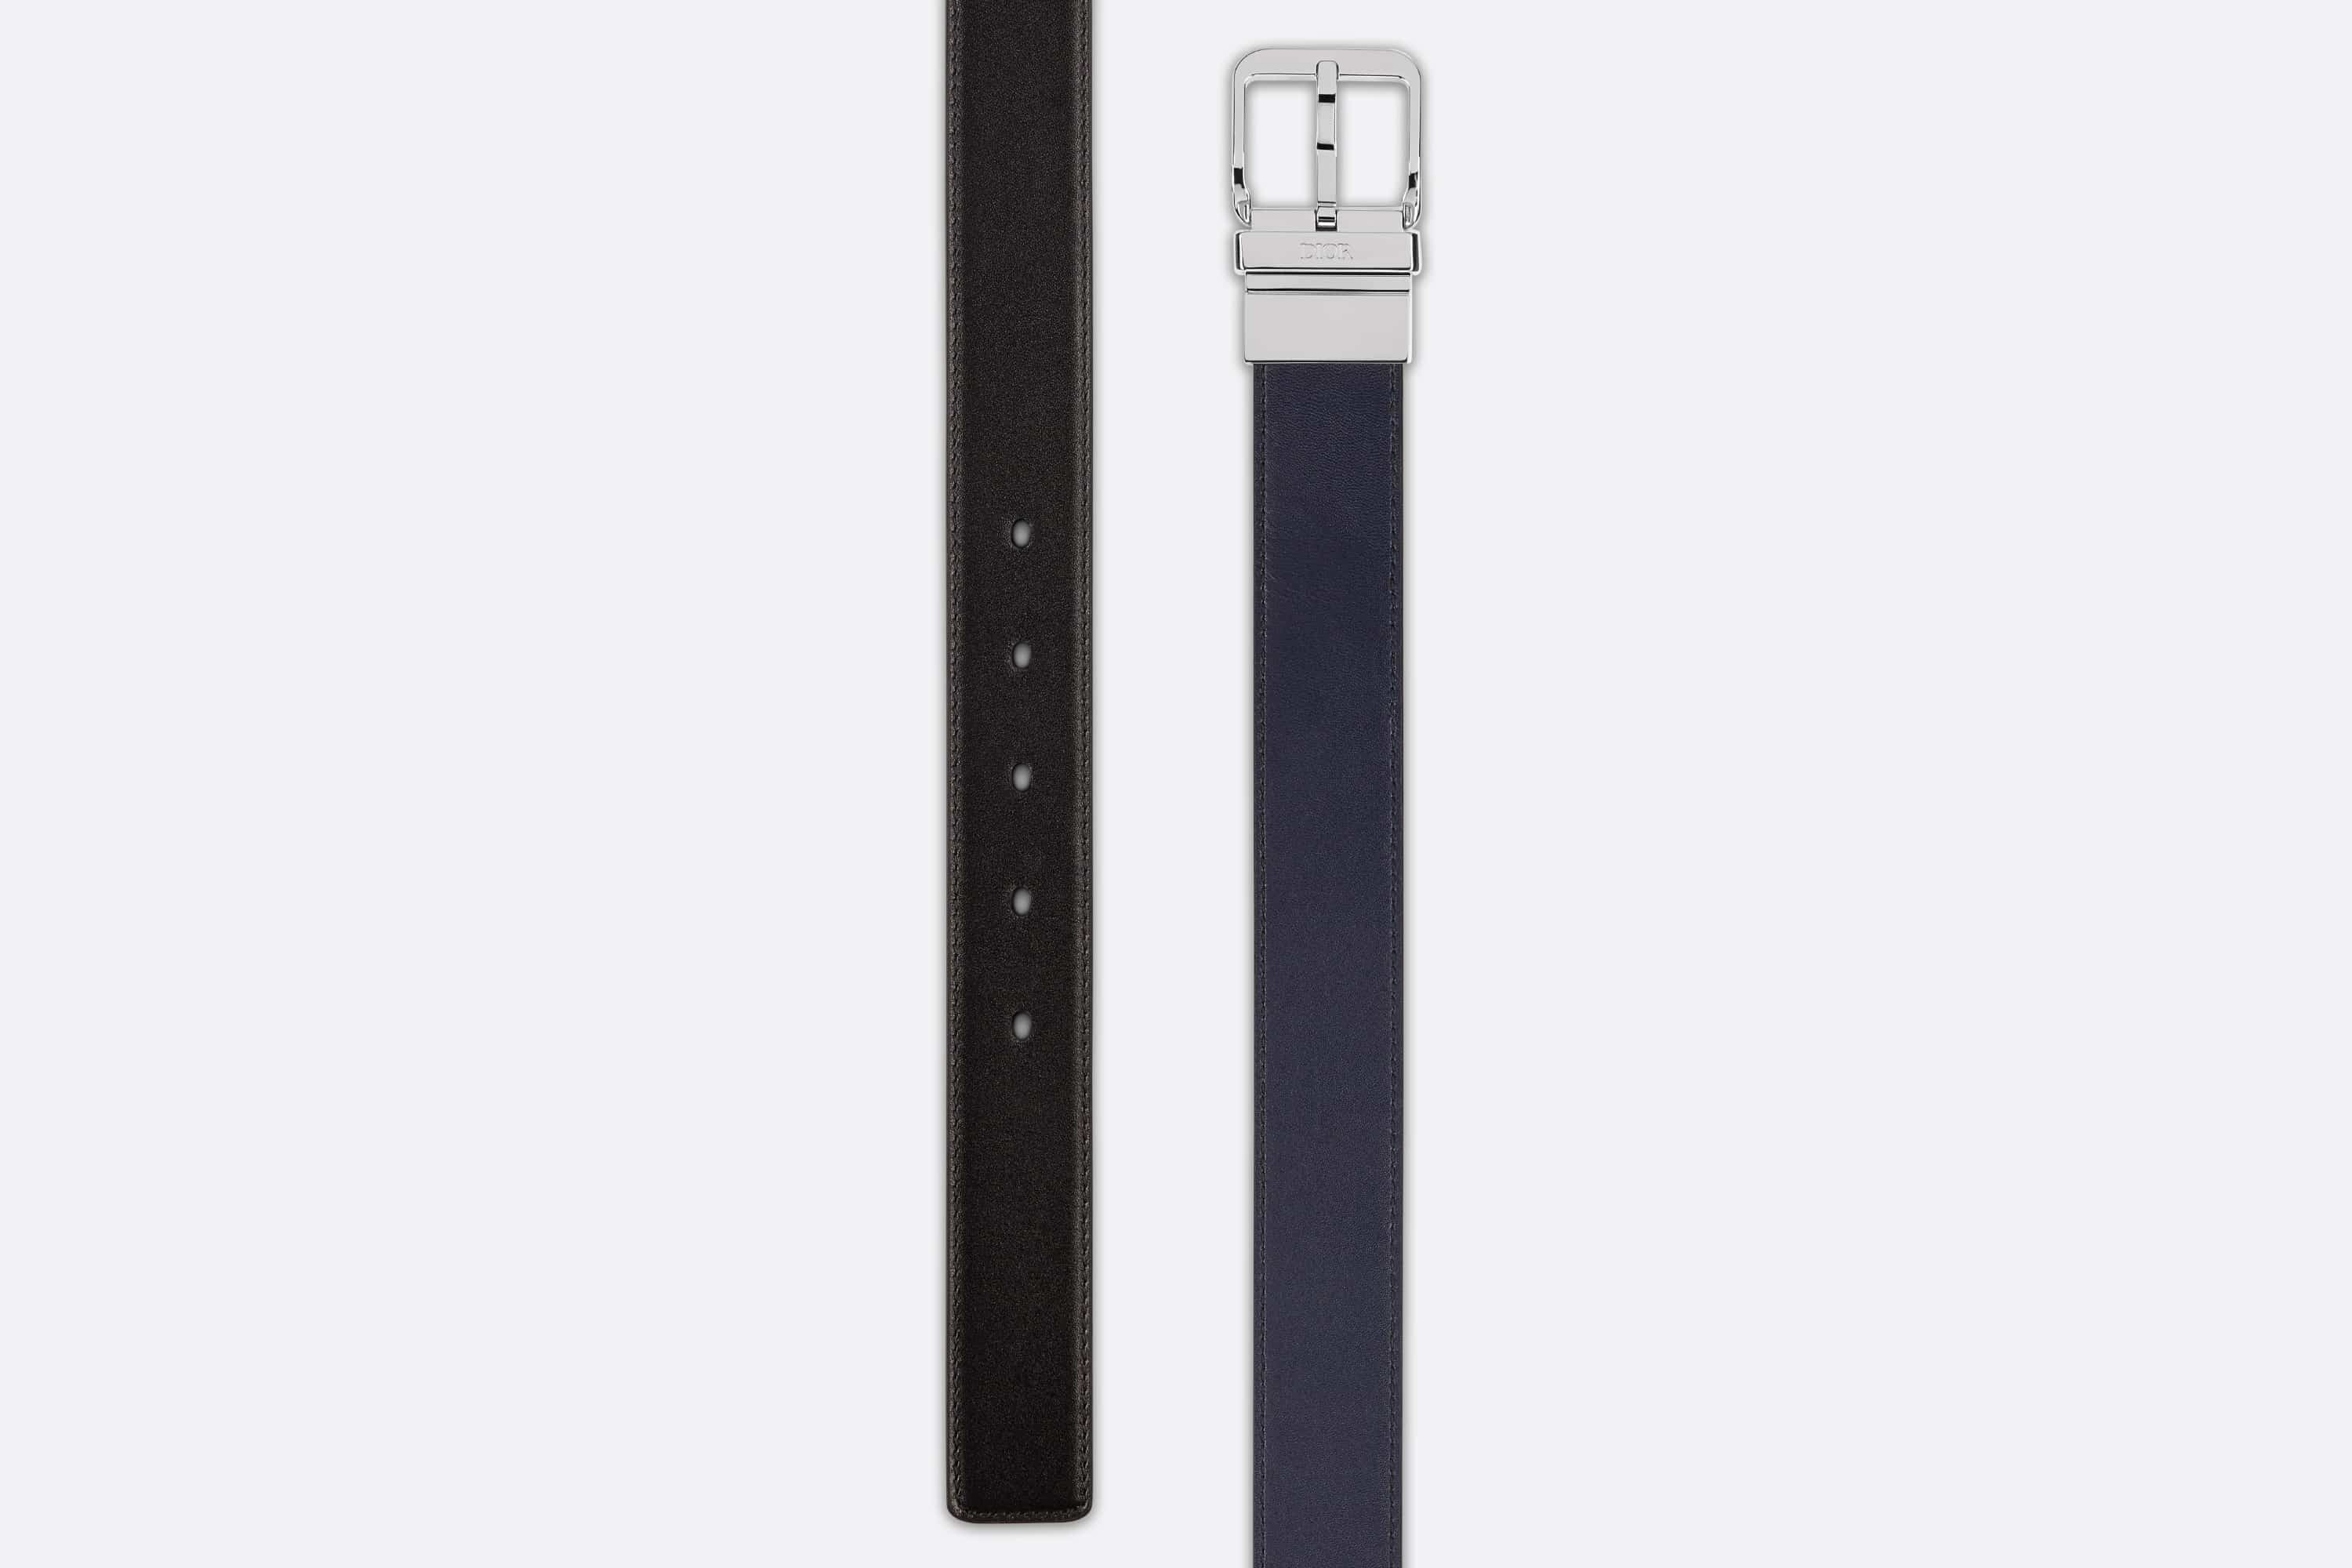 Reversible Belt Black and Navy Blue Smooth Calfskin, 30 MM